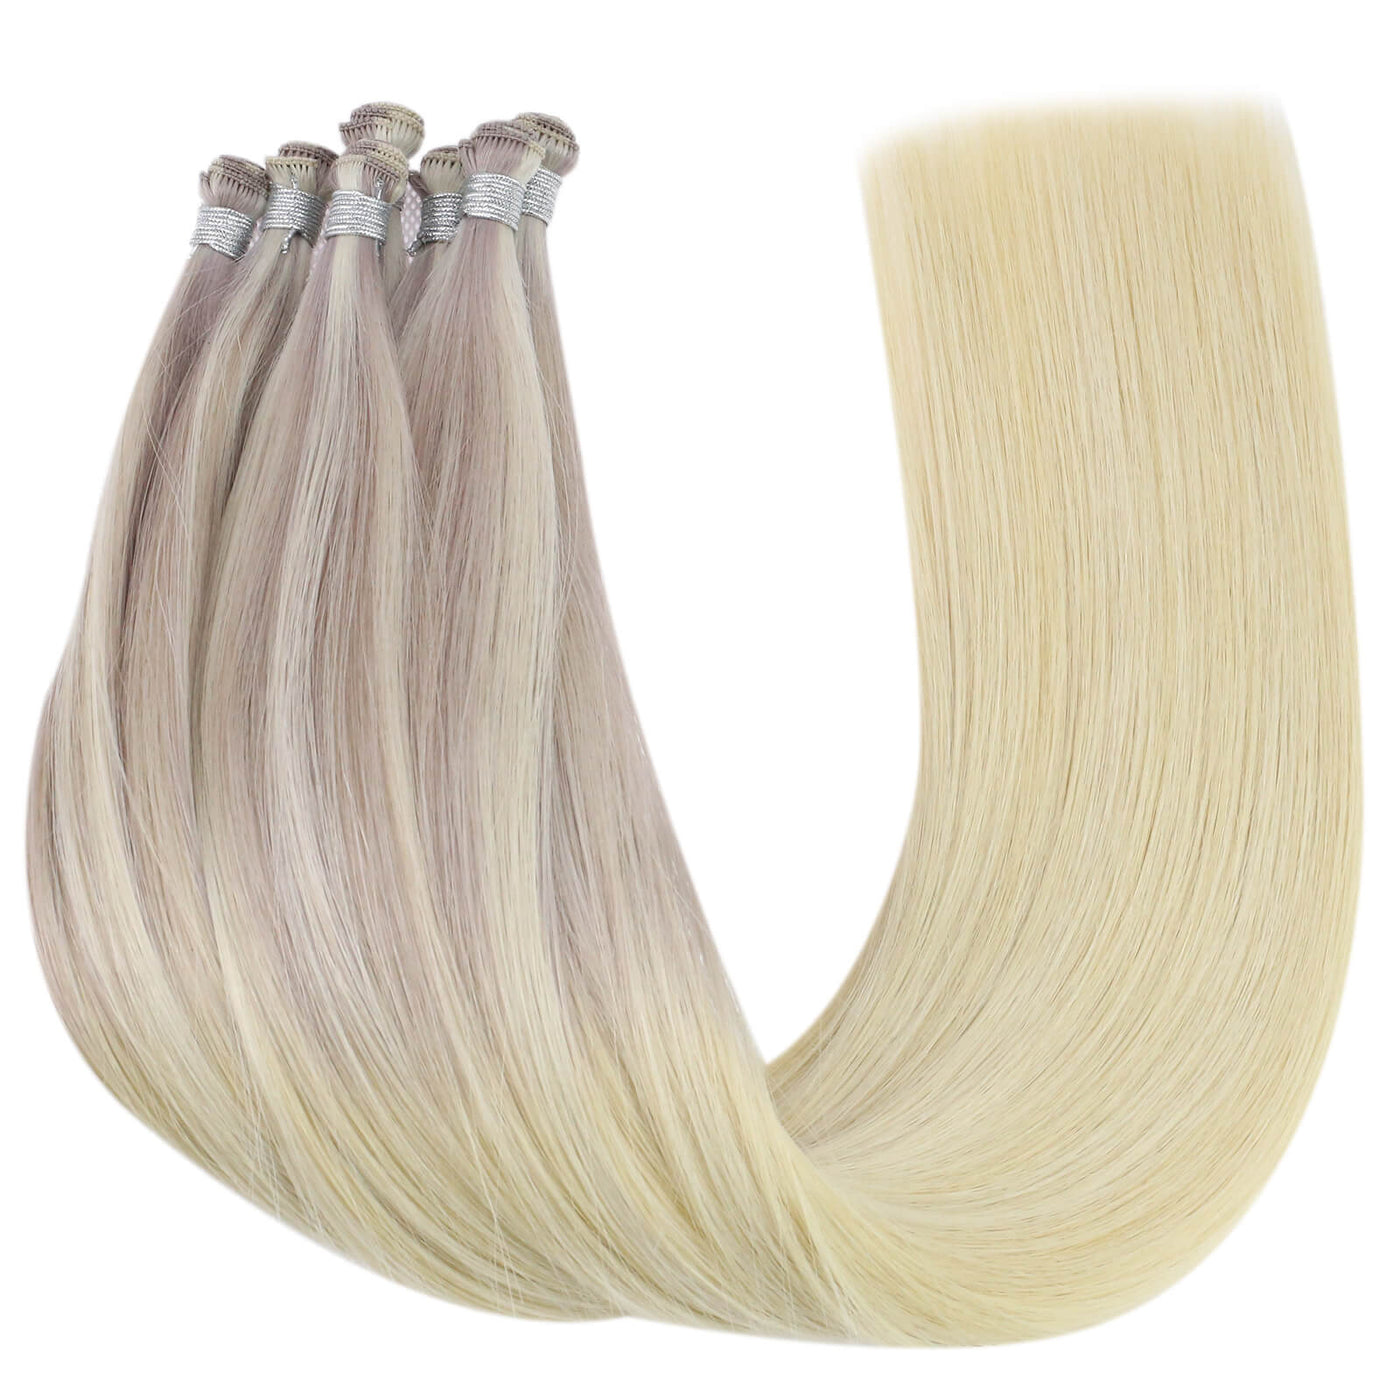 vivien Virgin+ Hand-tied extensions brown with blonde human hair